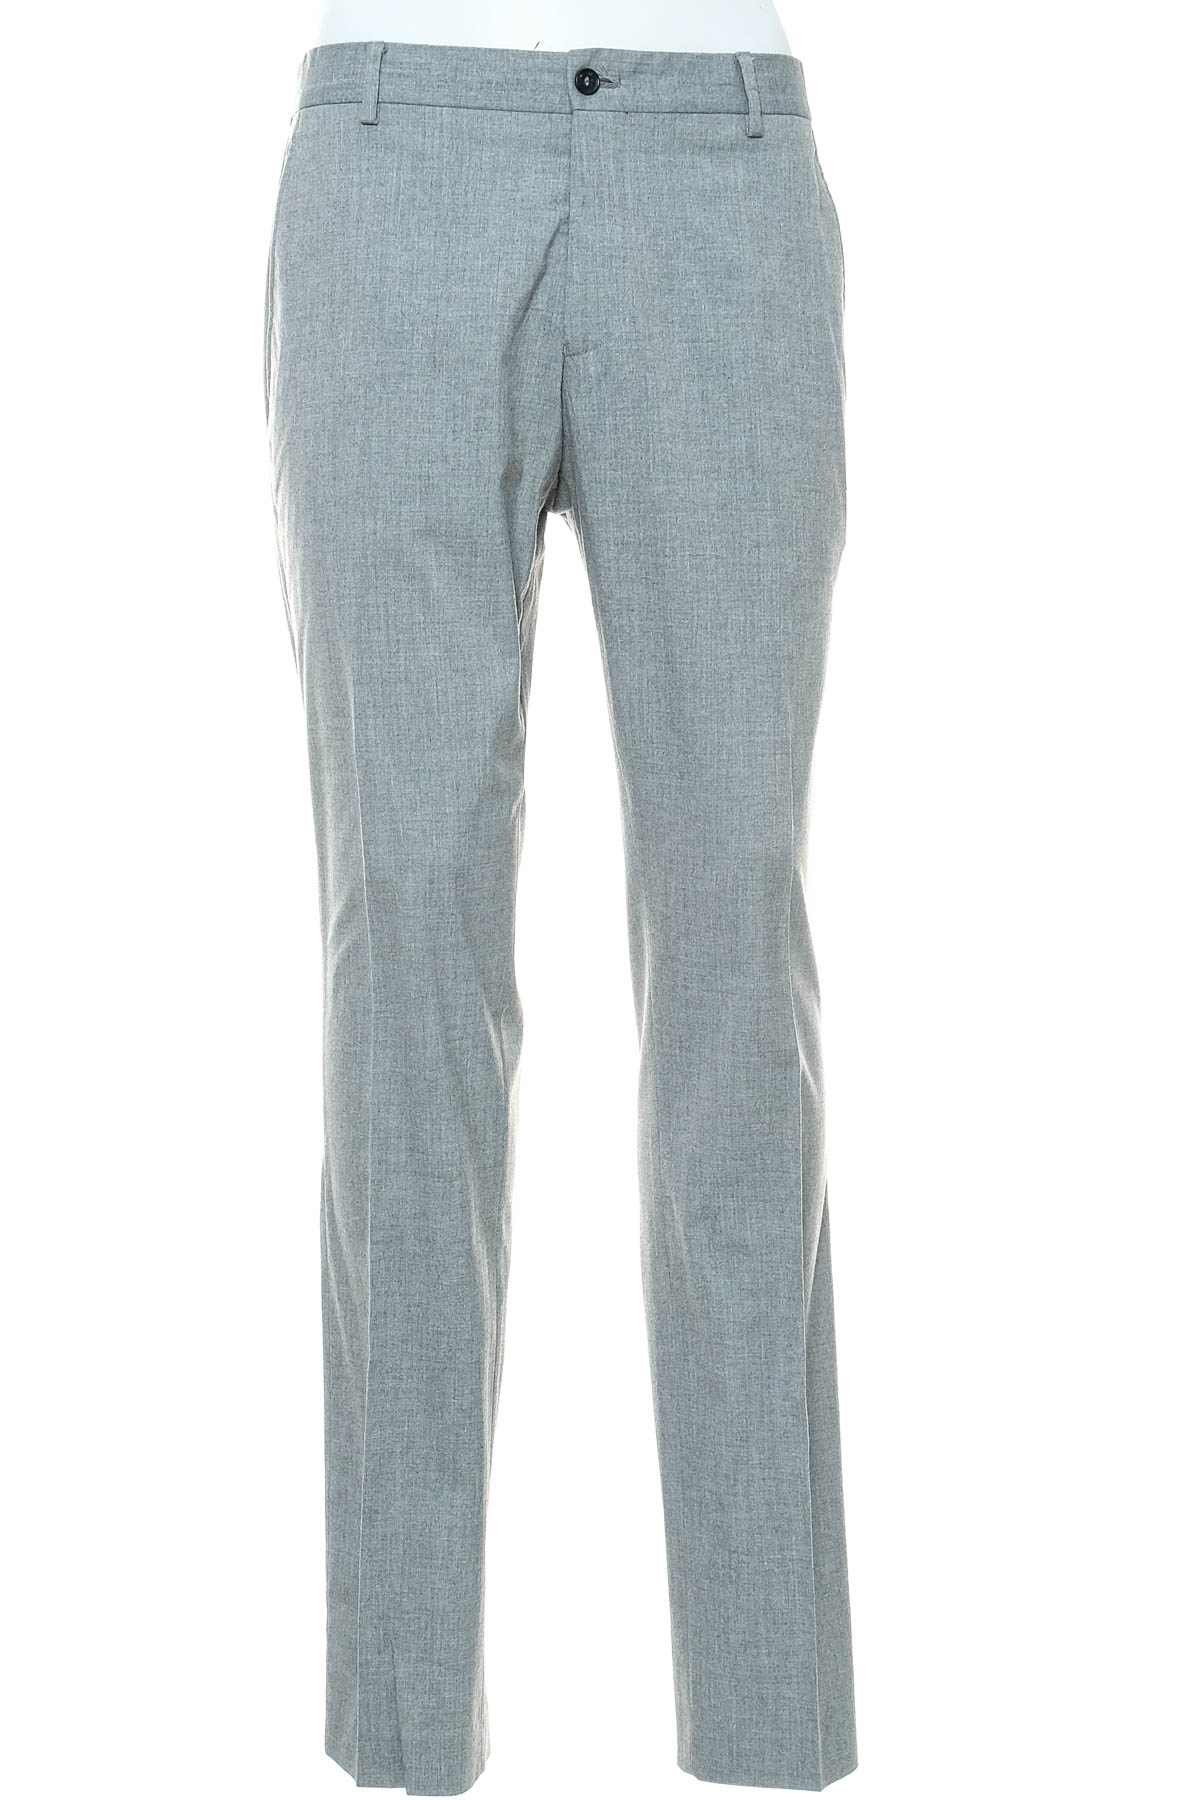 Pantalon pentru bărbați - SELECTED HOMME - 0